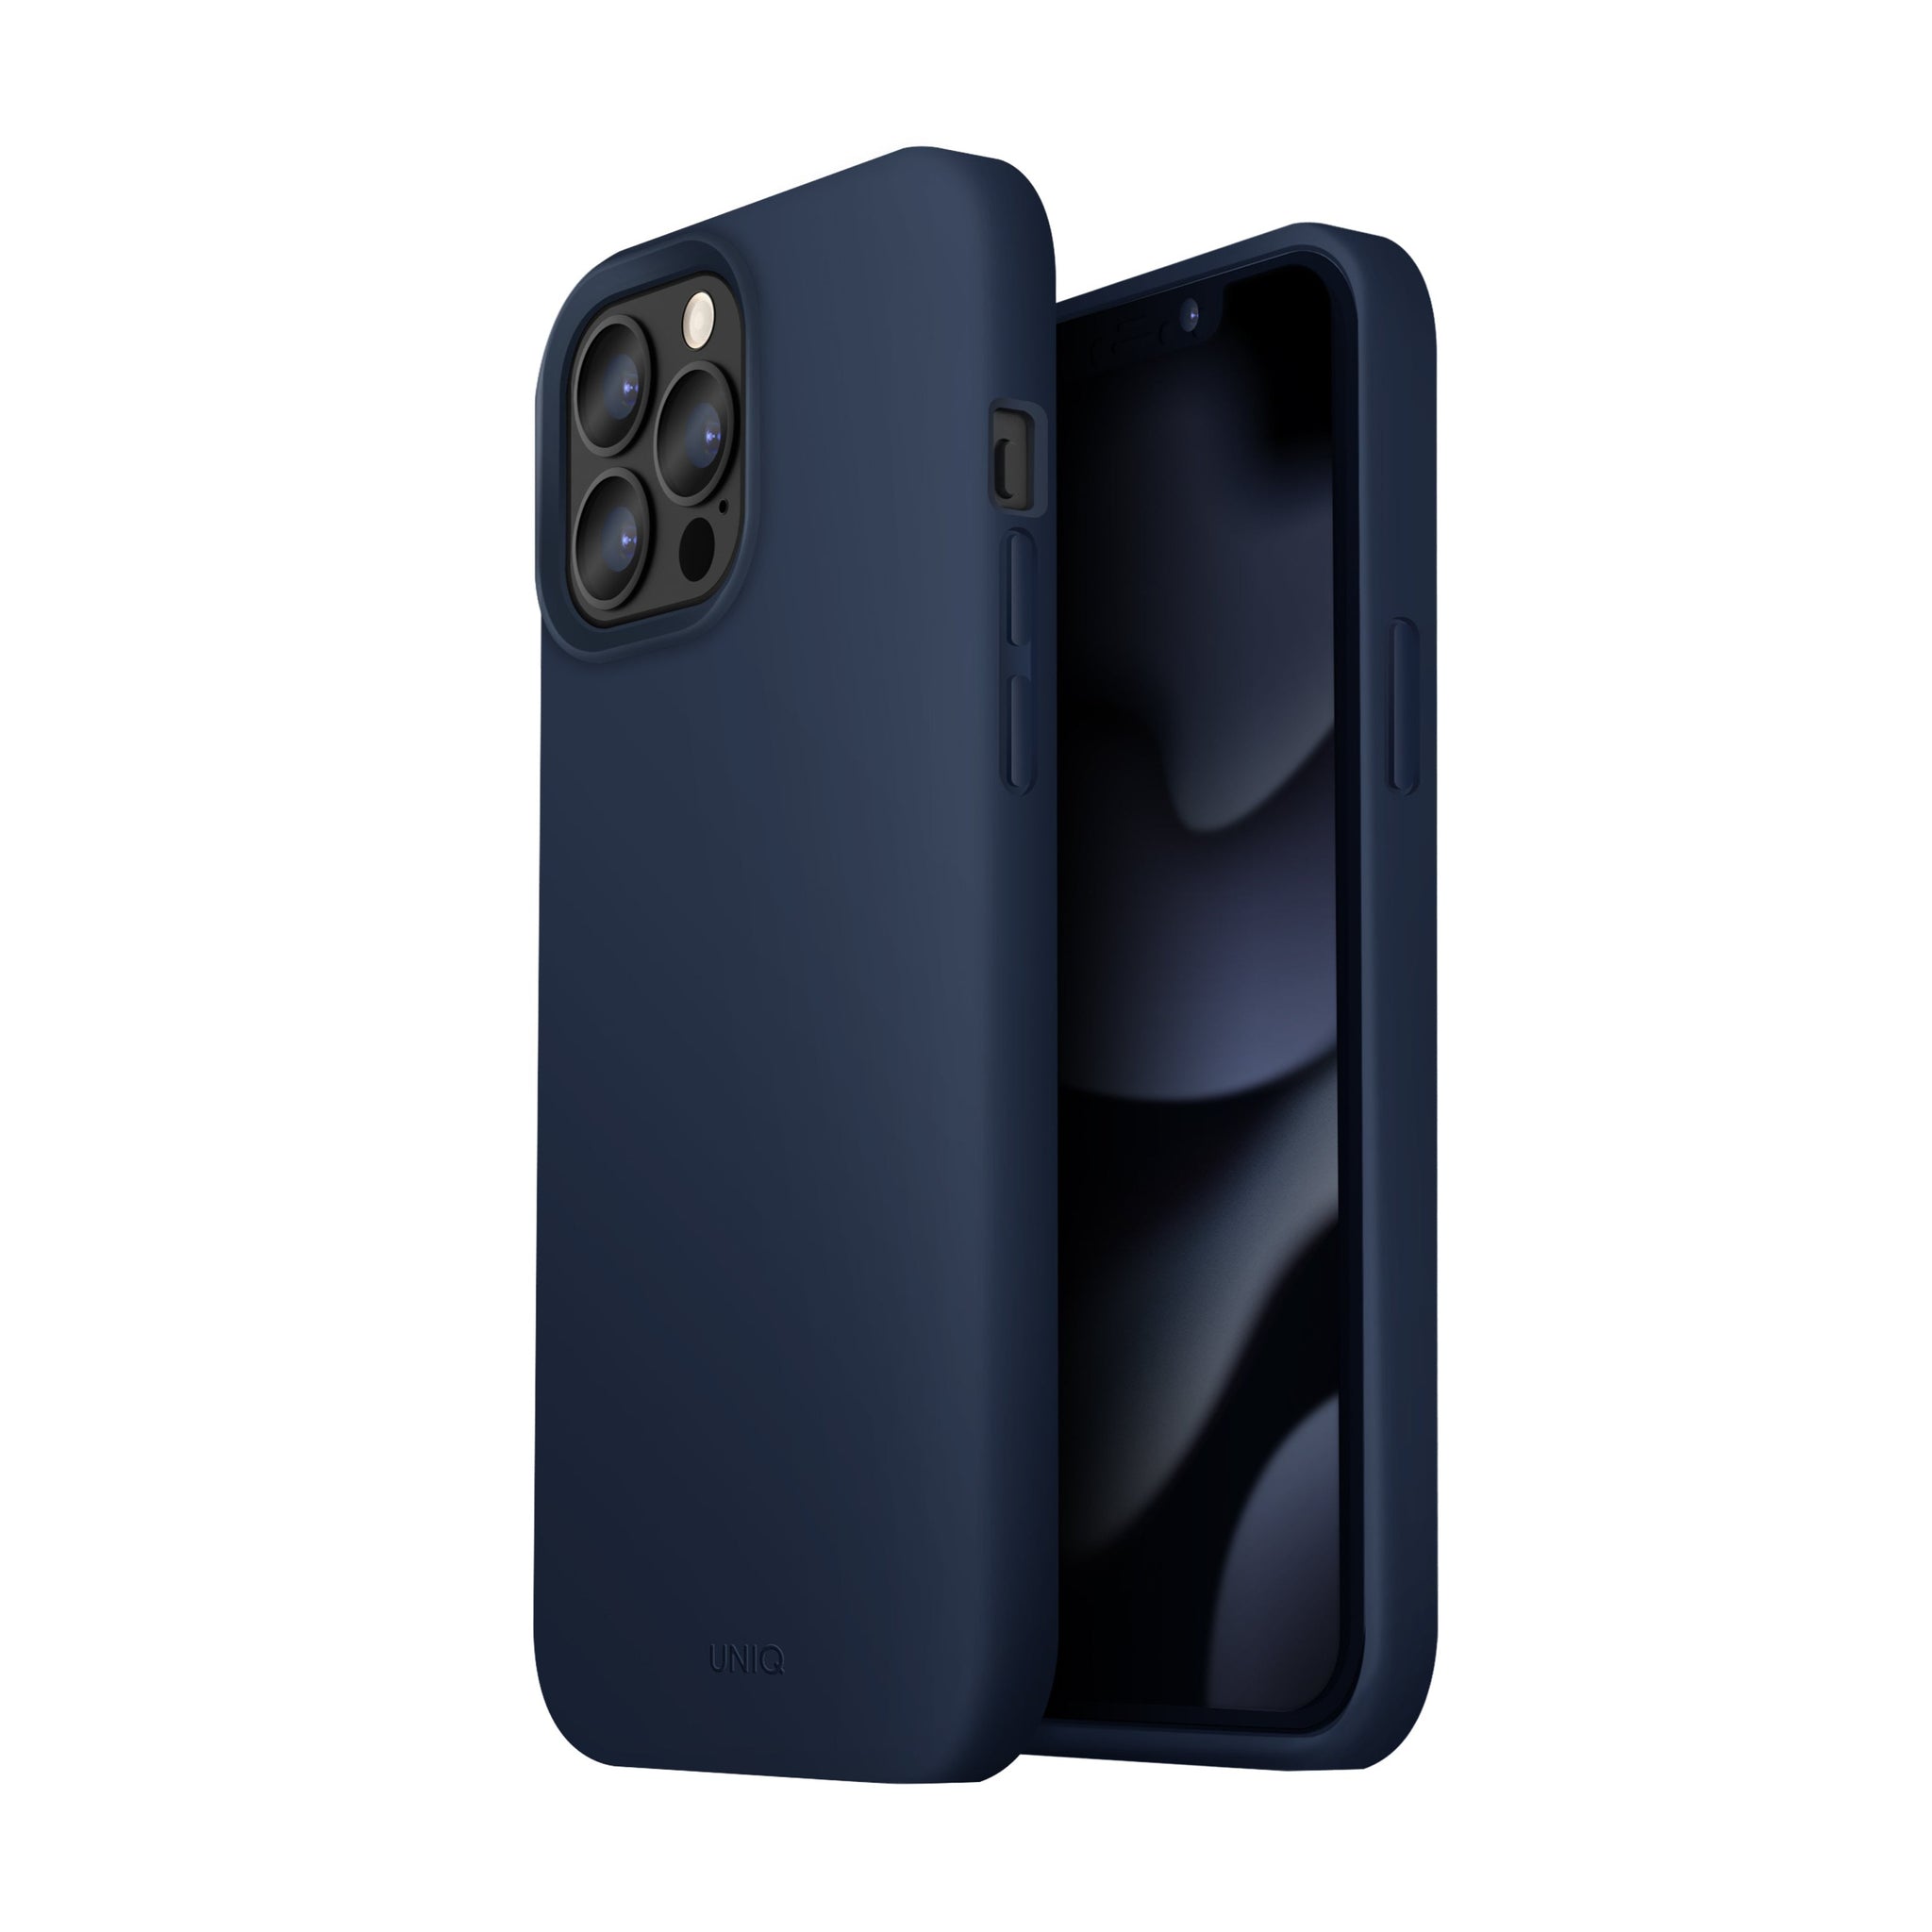 Uniq Iphone 13 Pro Max Hybrid Lino Mobile Cover / Case - MARINE (BLUE) - كفر سليكون من شركة يونيك